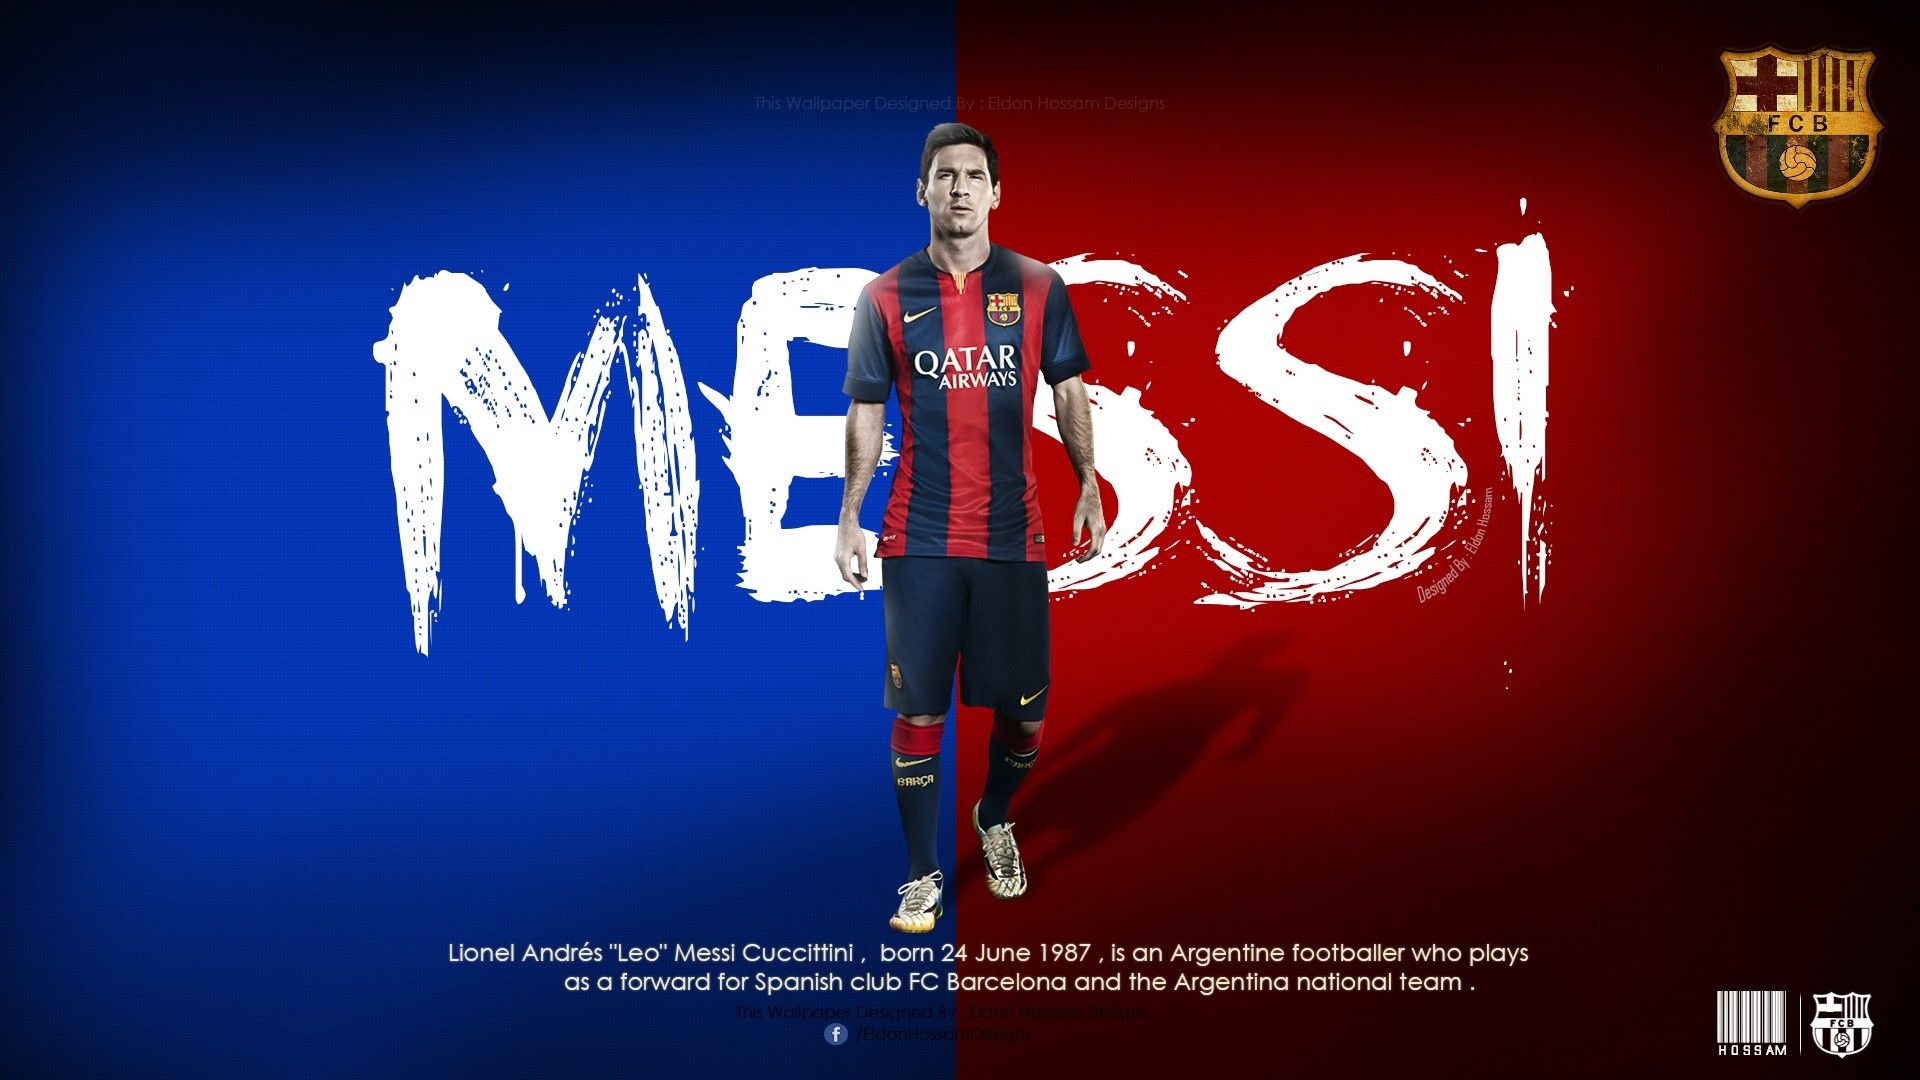 HD Lionel Messi Barcelona Fondos de pantalla | Fondo de pantalla de fútbol 2019